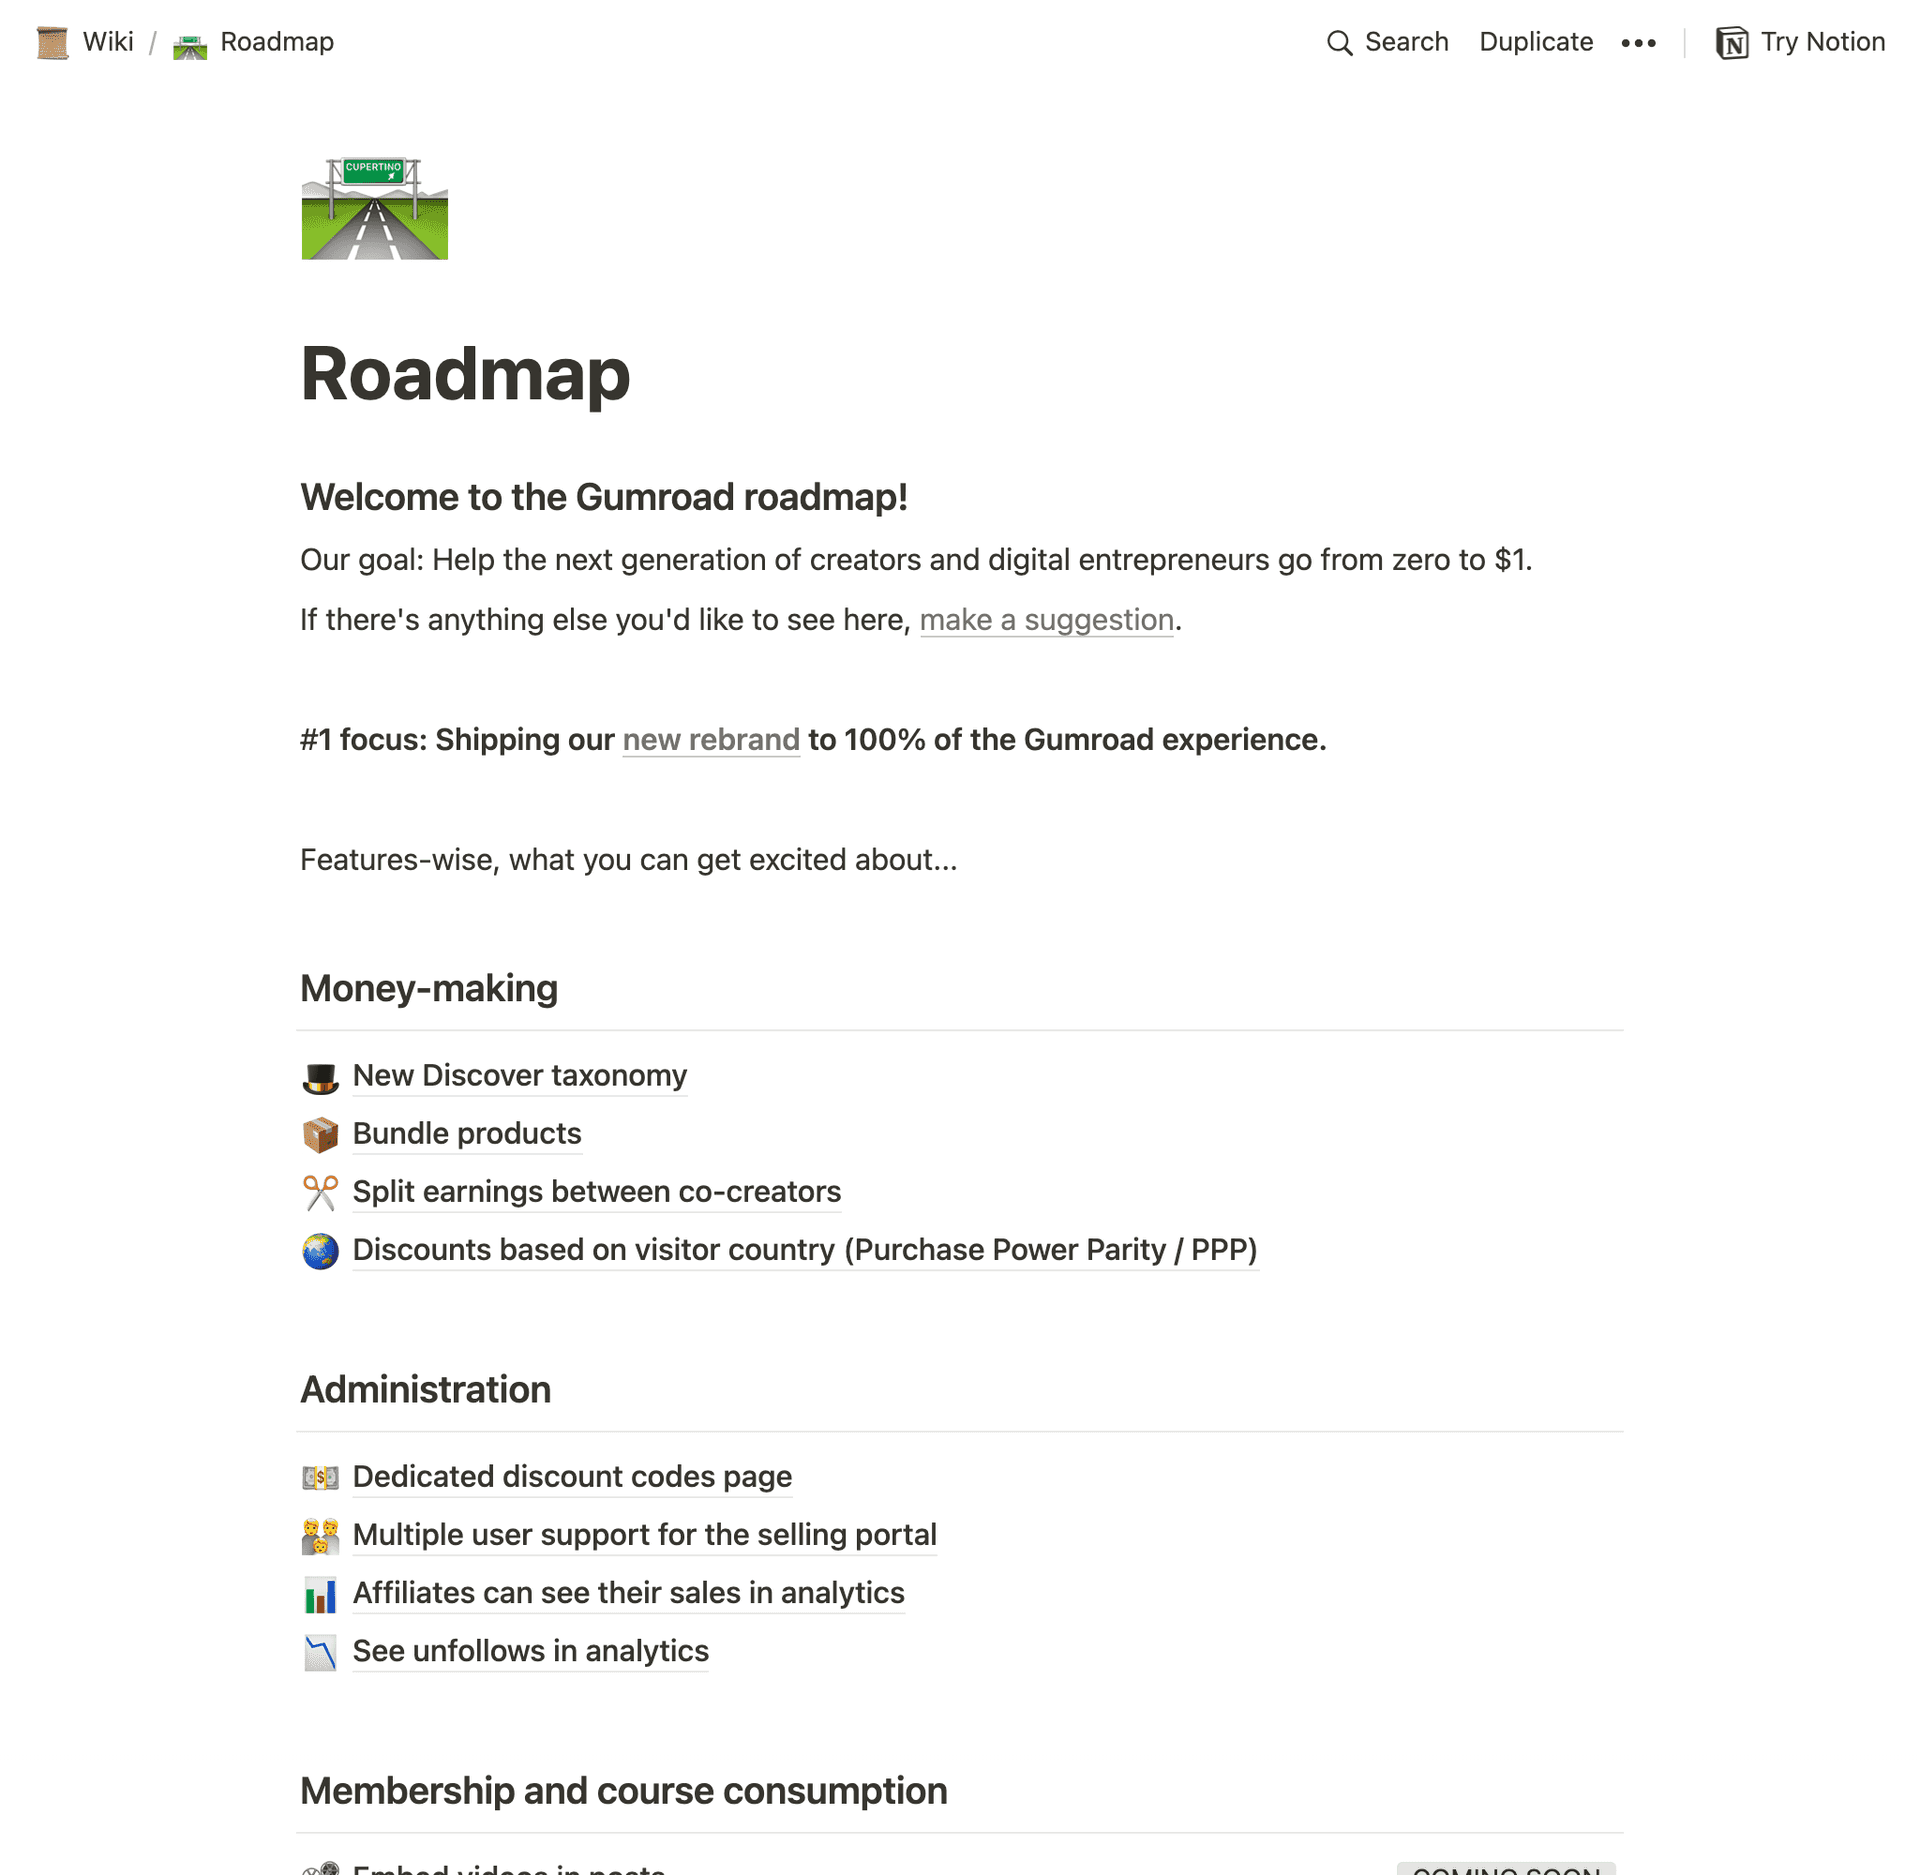 A screenshot of the Gumroad public roadmap